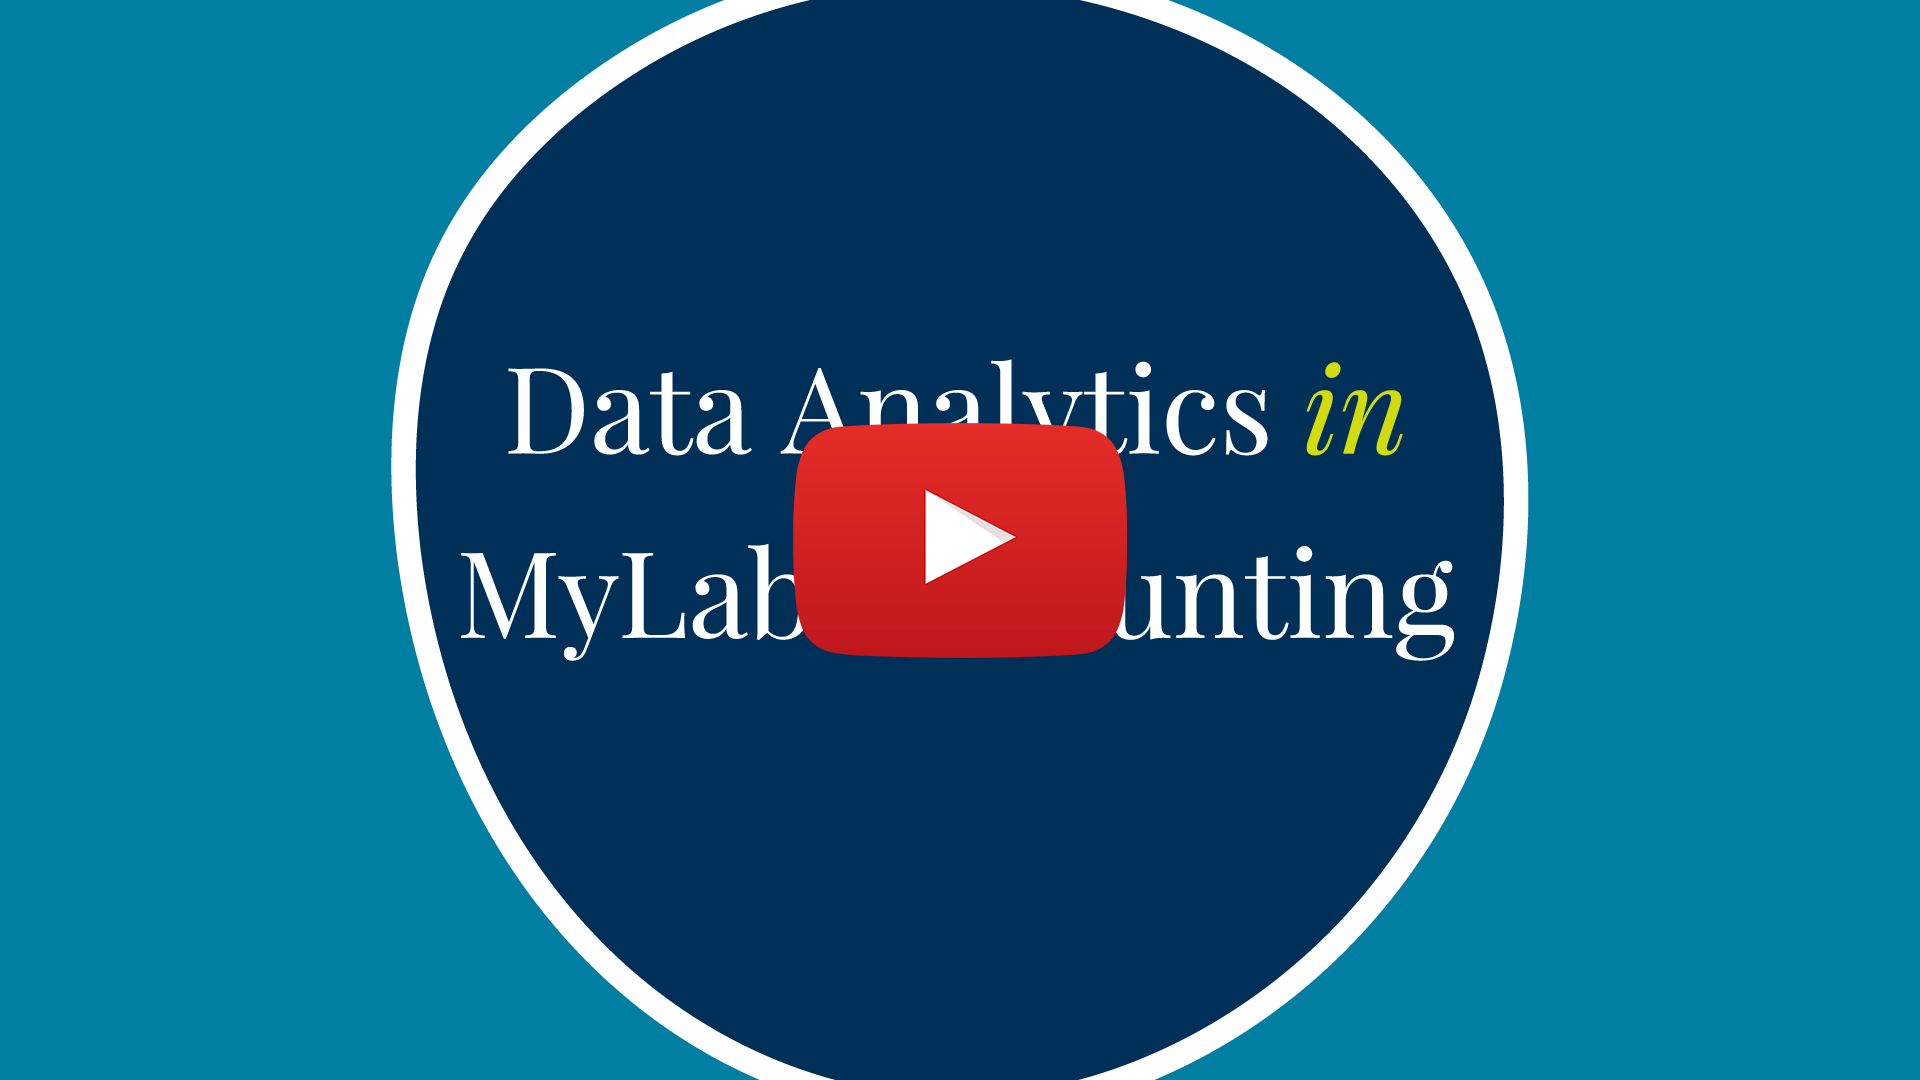 Data Analytics in MyLab Accounting